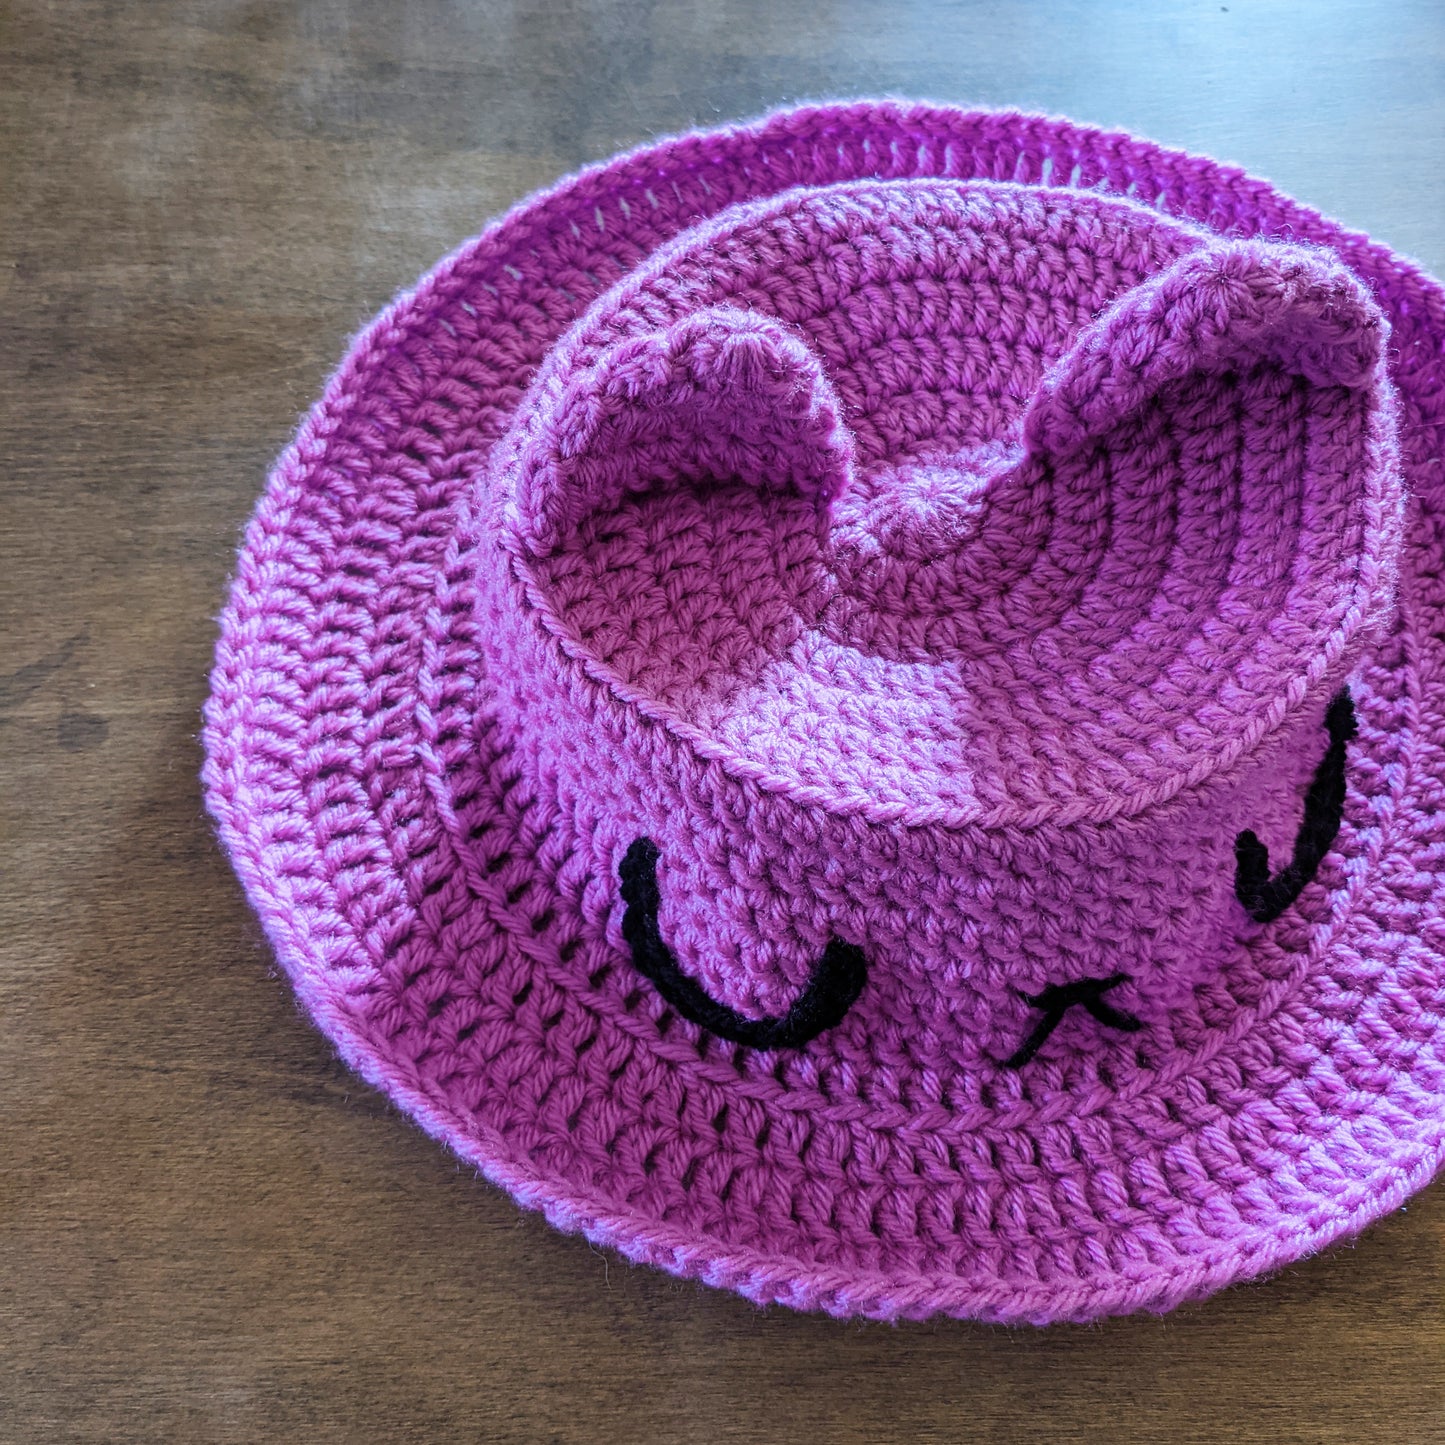 Purple Cat Bucket Hat - Sample Sale